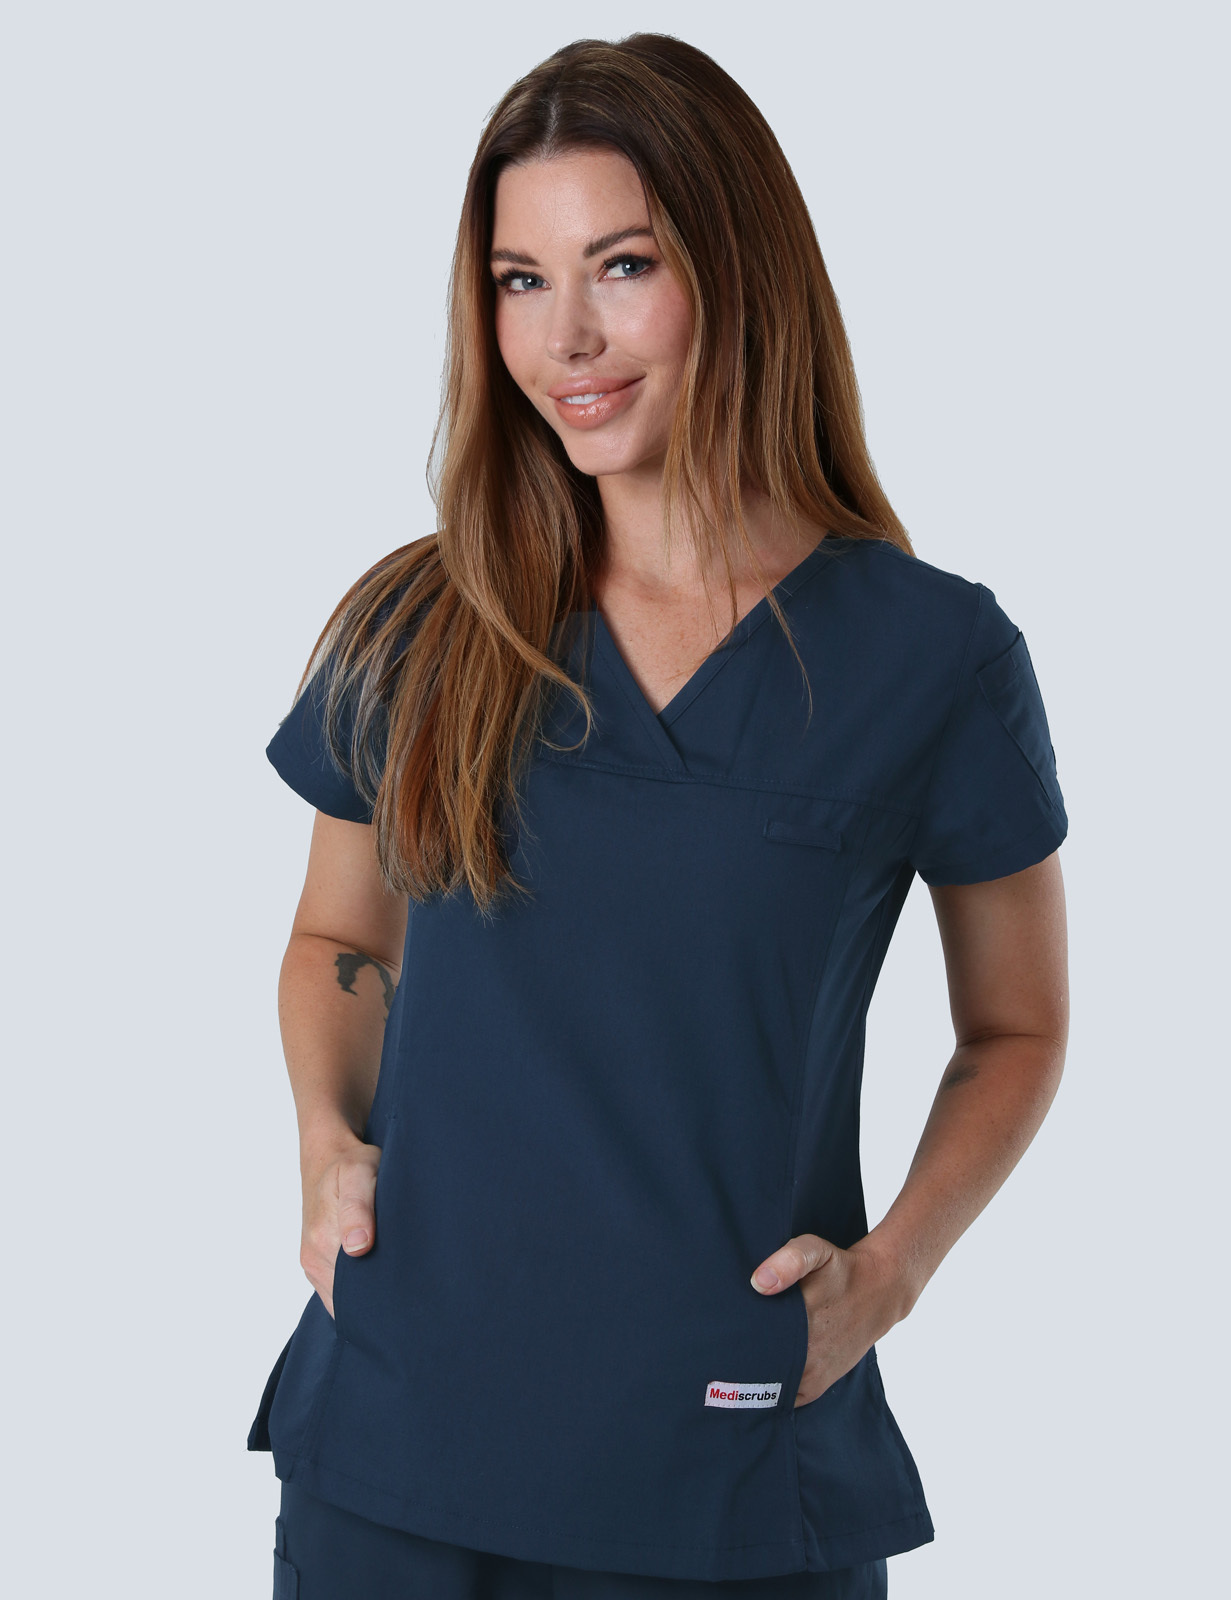 Biloela Hospital Healthcare Department Uniform Set Bundle (Women's Fit Solid Top and Cargo pants in Navy incl Logos)